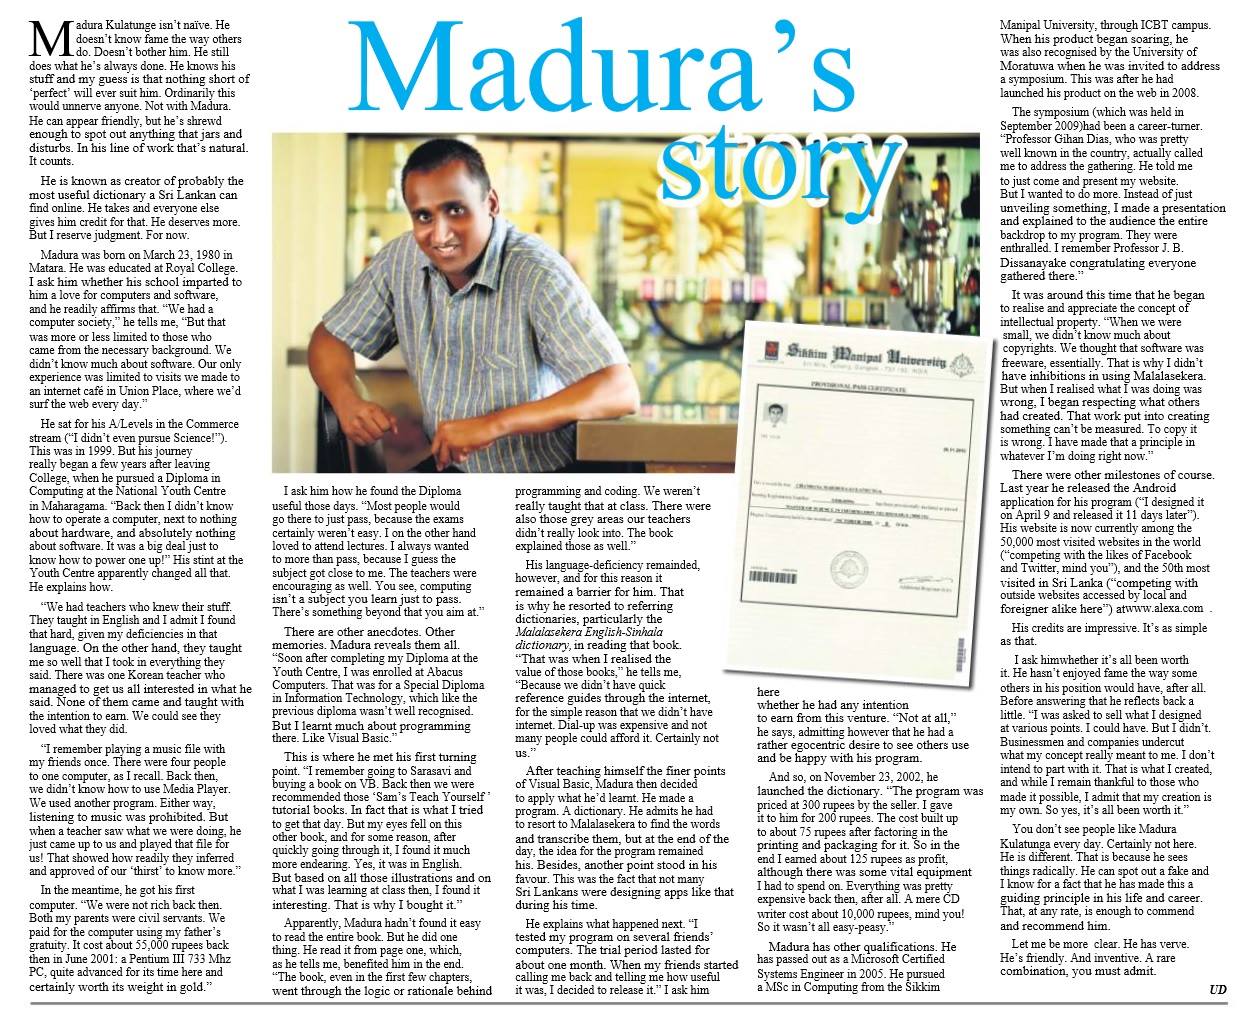 Madura's story - The Nation insight 21-June-2015 Page i10